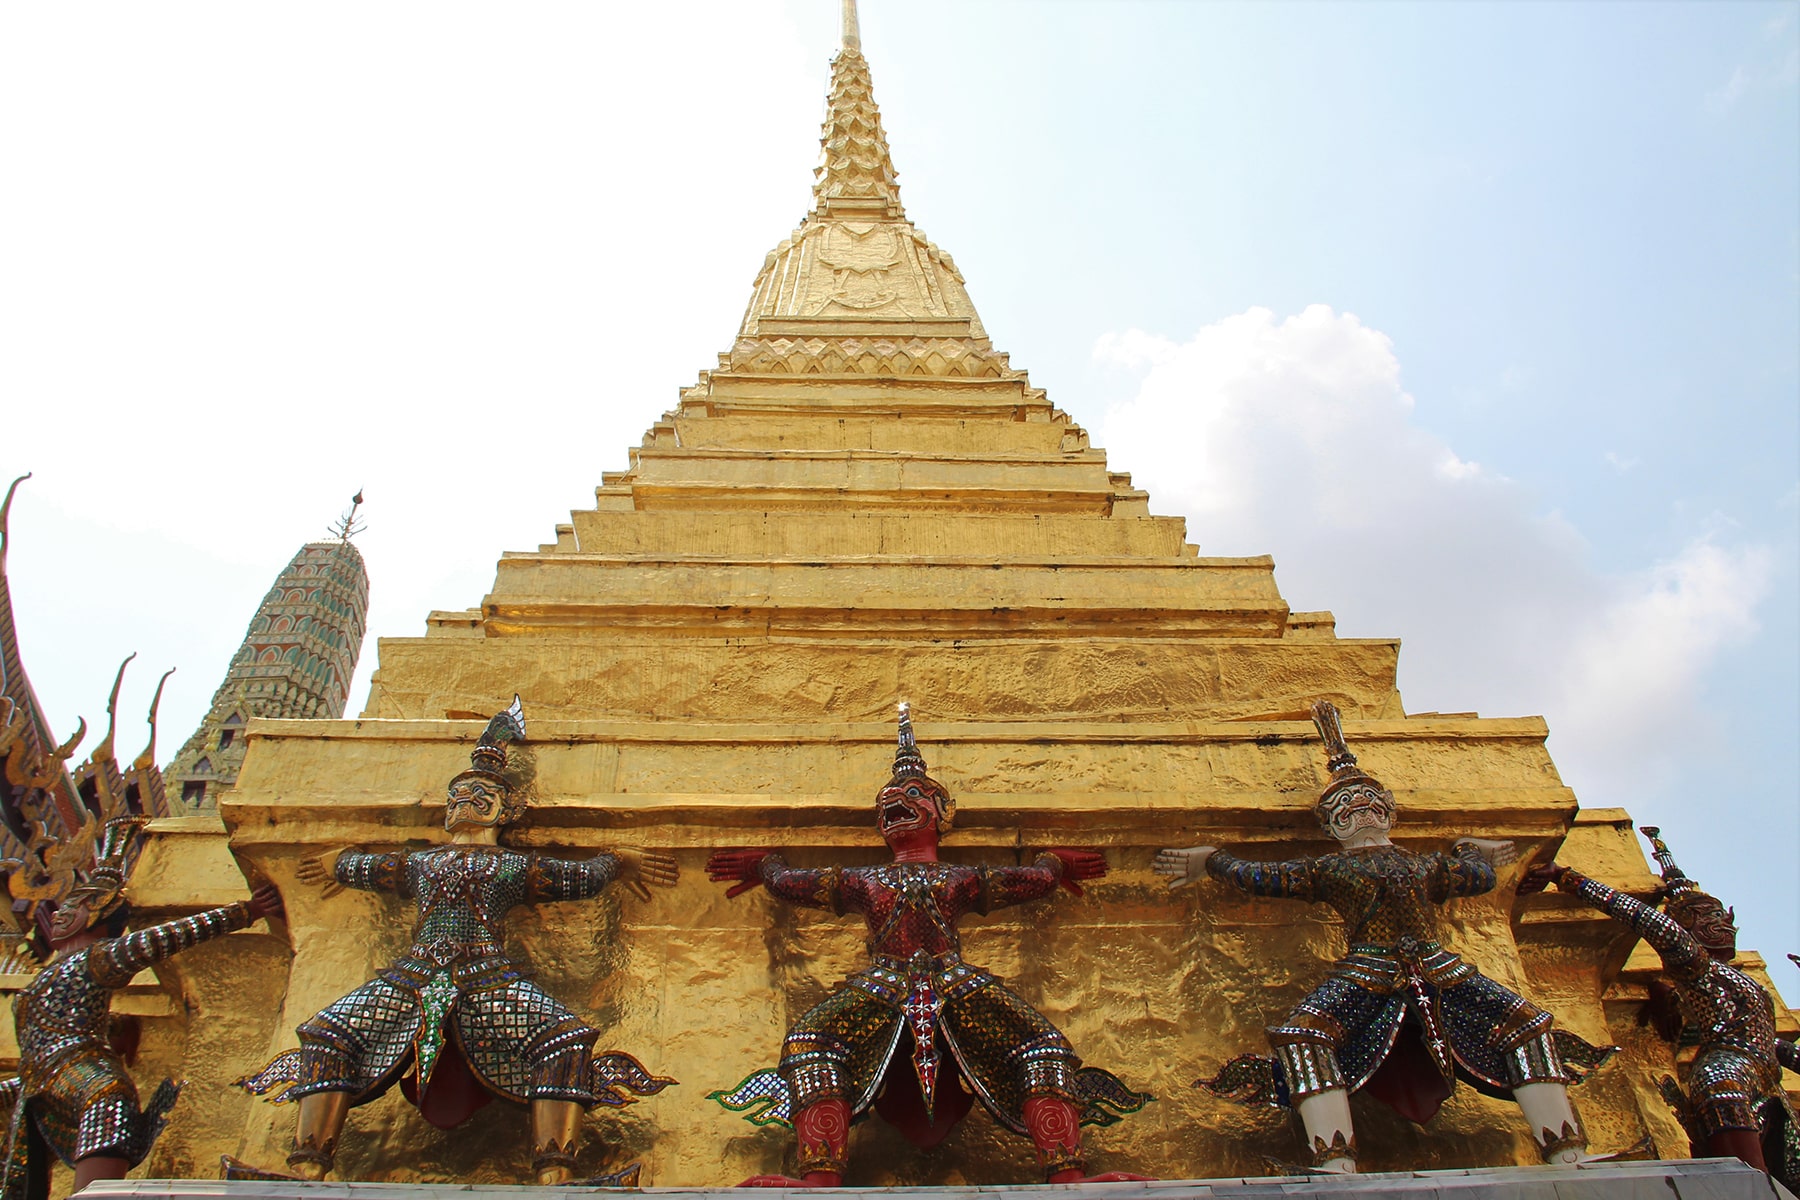 Yaks demoni che sorreggono uno stupa nel Gran palazzo reale di Bangkok